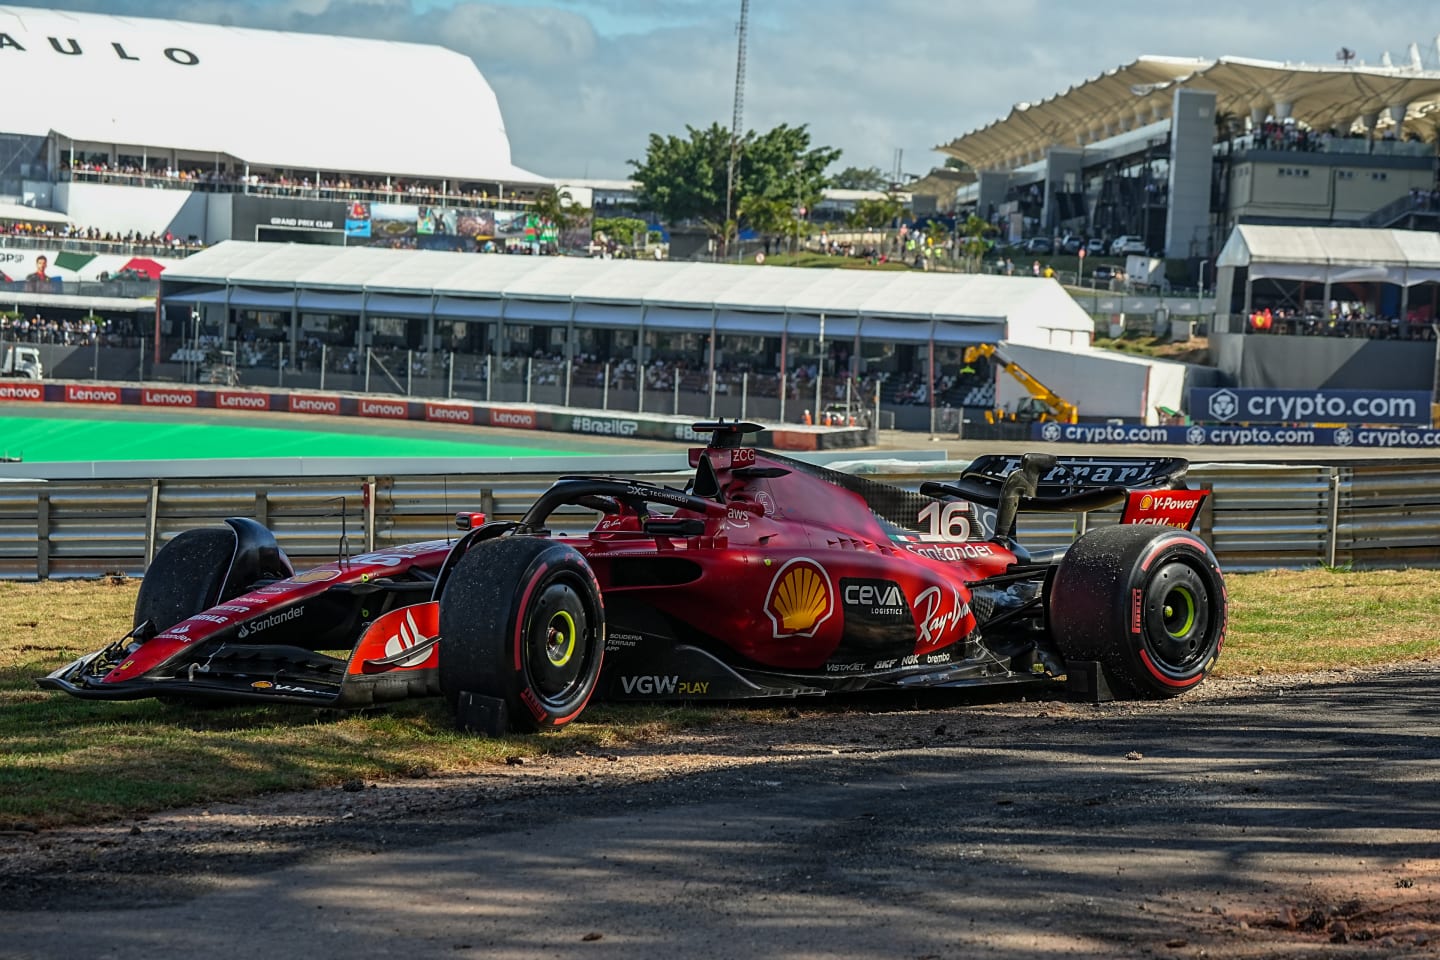 SAO PAULO, BRAZIL - NOVEMBER 5: Car of Charles Leclerc of Ferrari, during the Grand Prix Sao Paulo